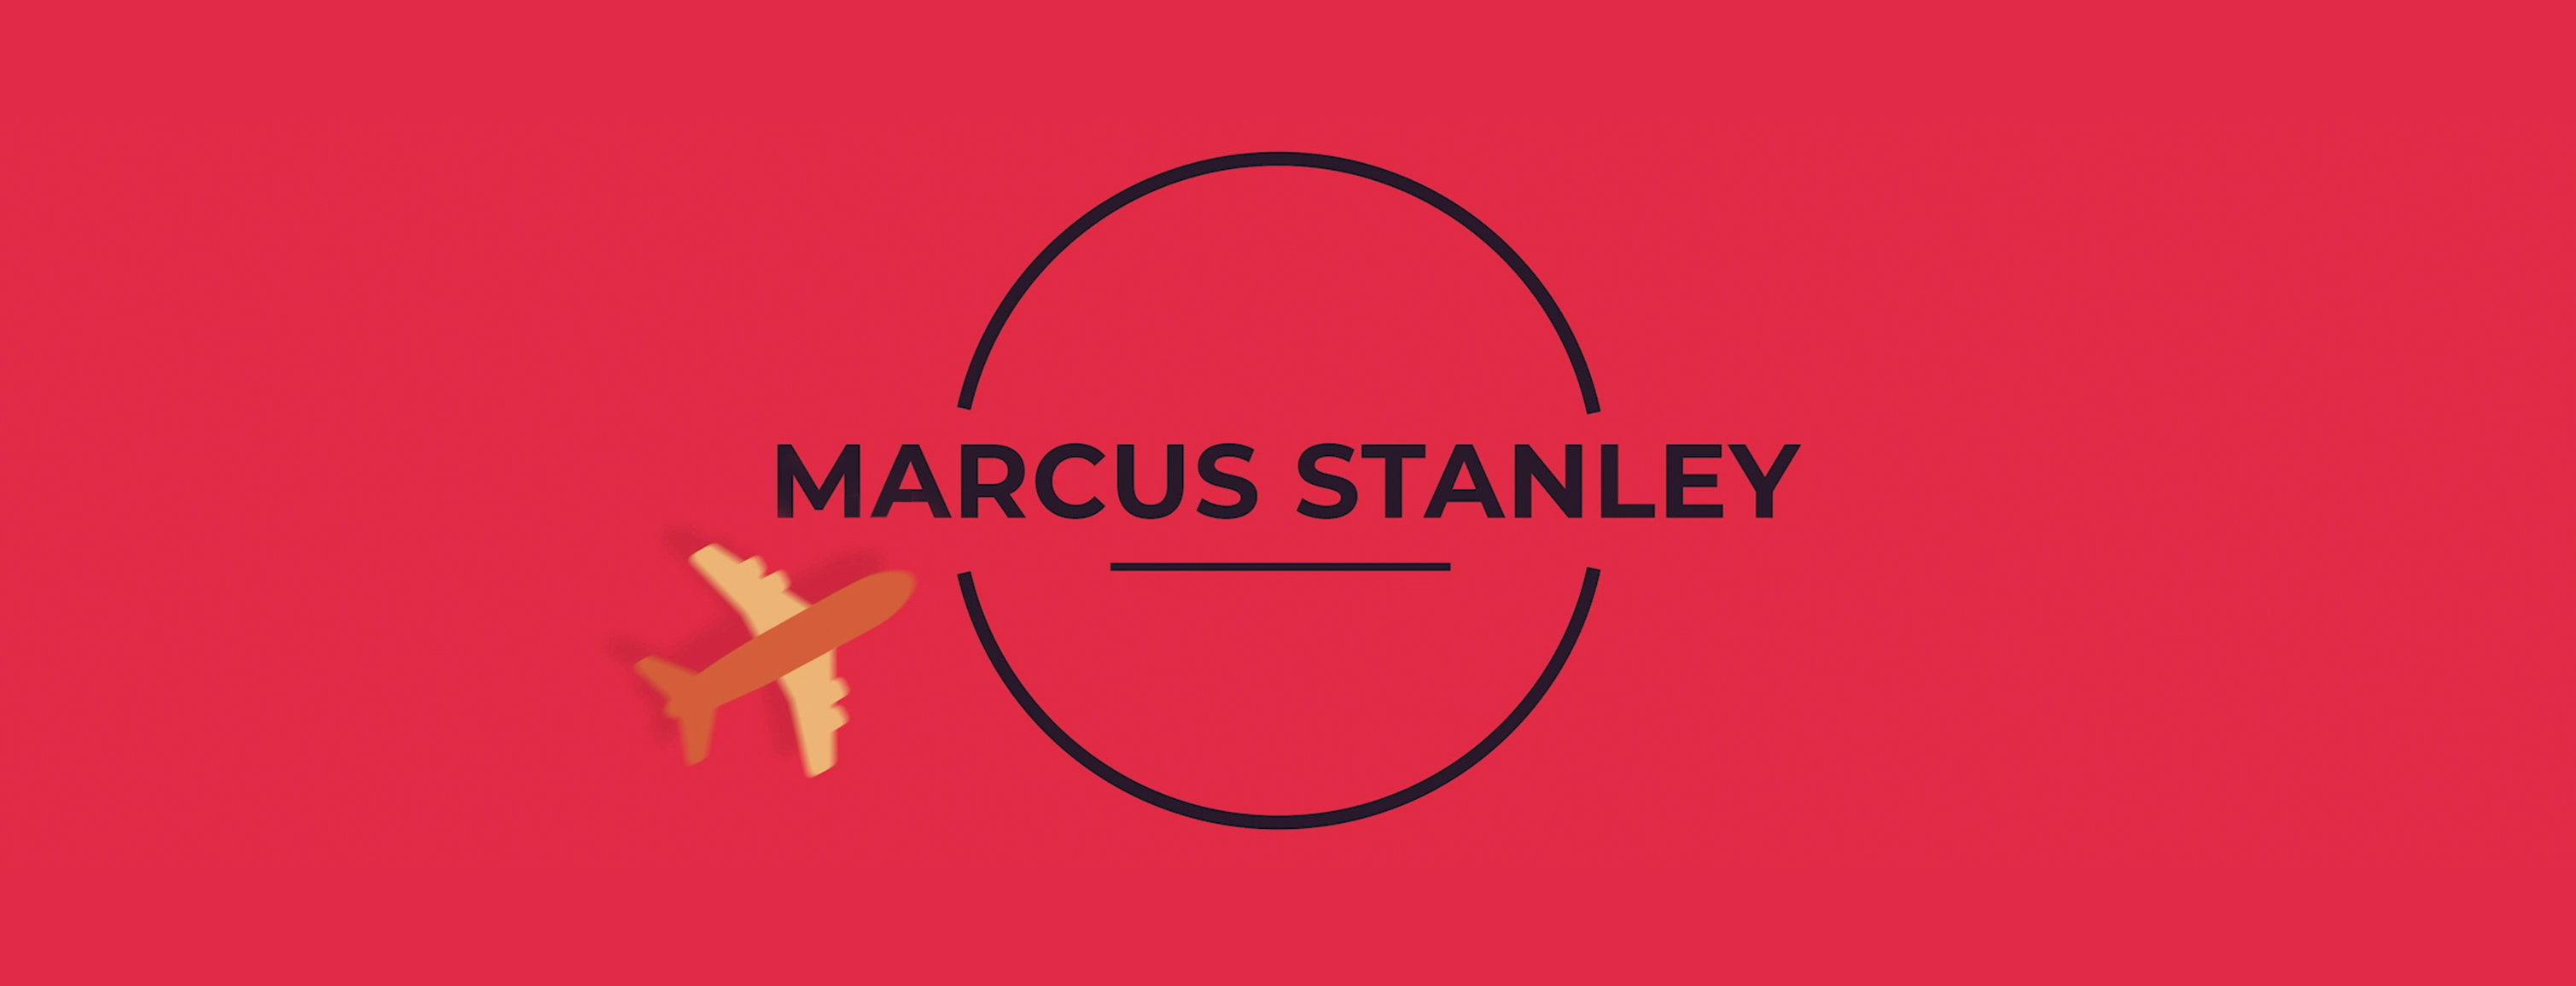 Marcus Stanley